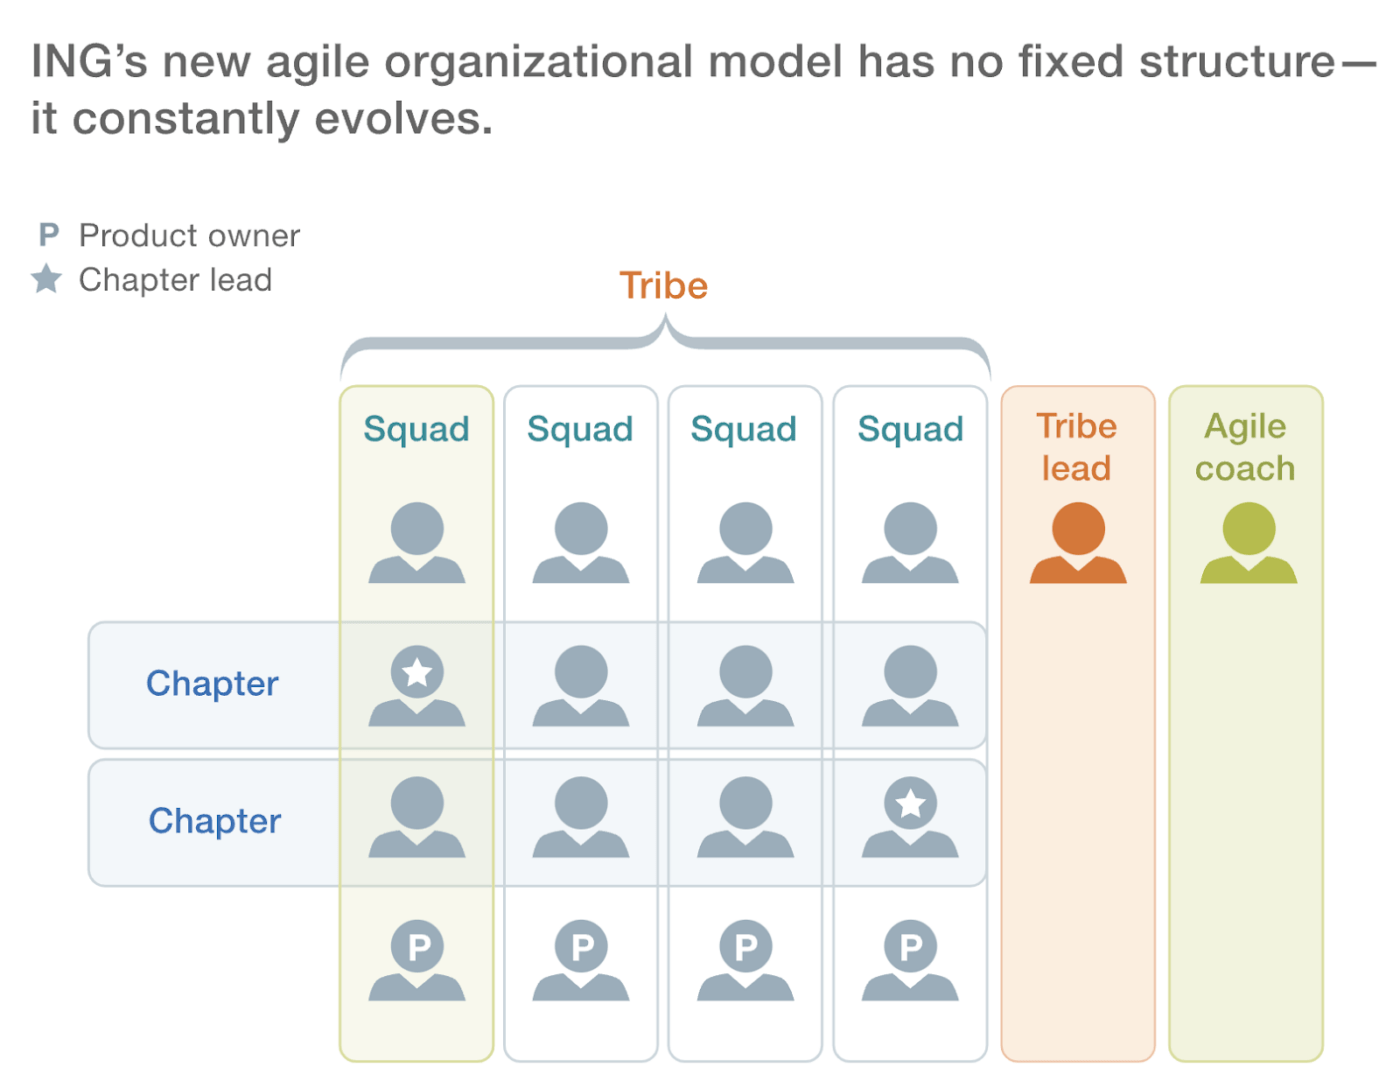 ING’s agile organizational model